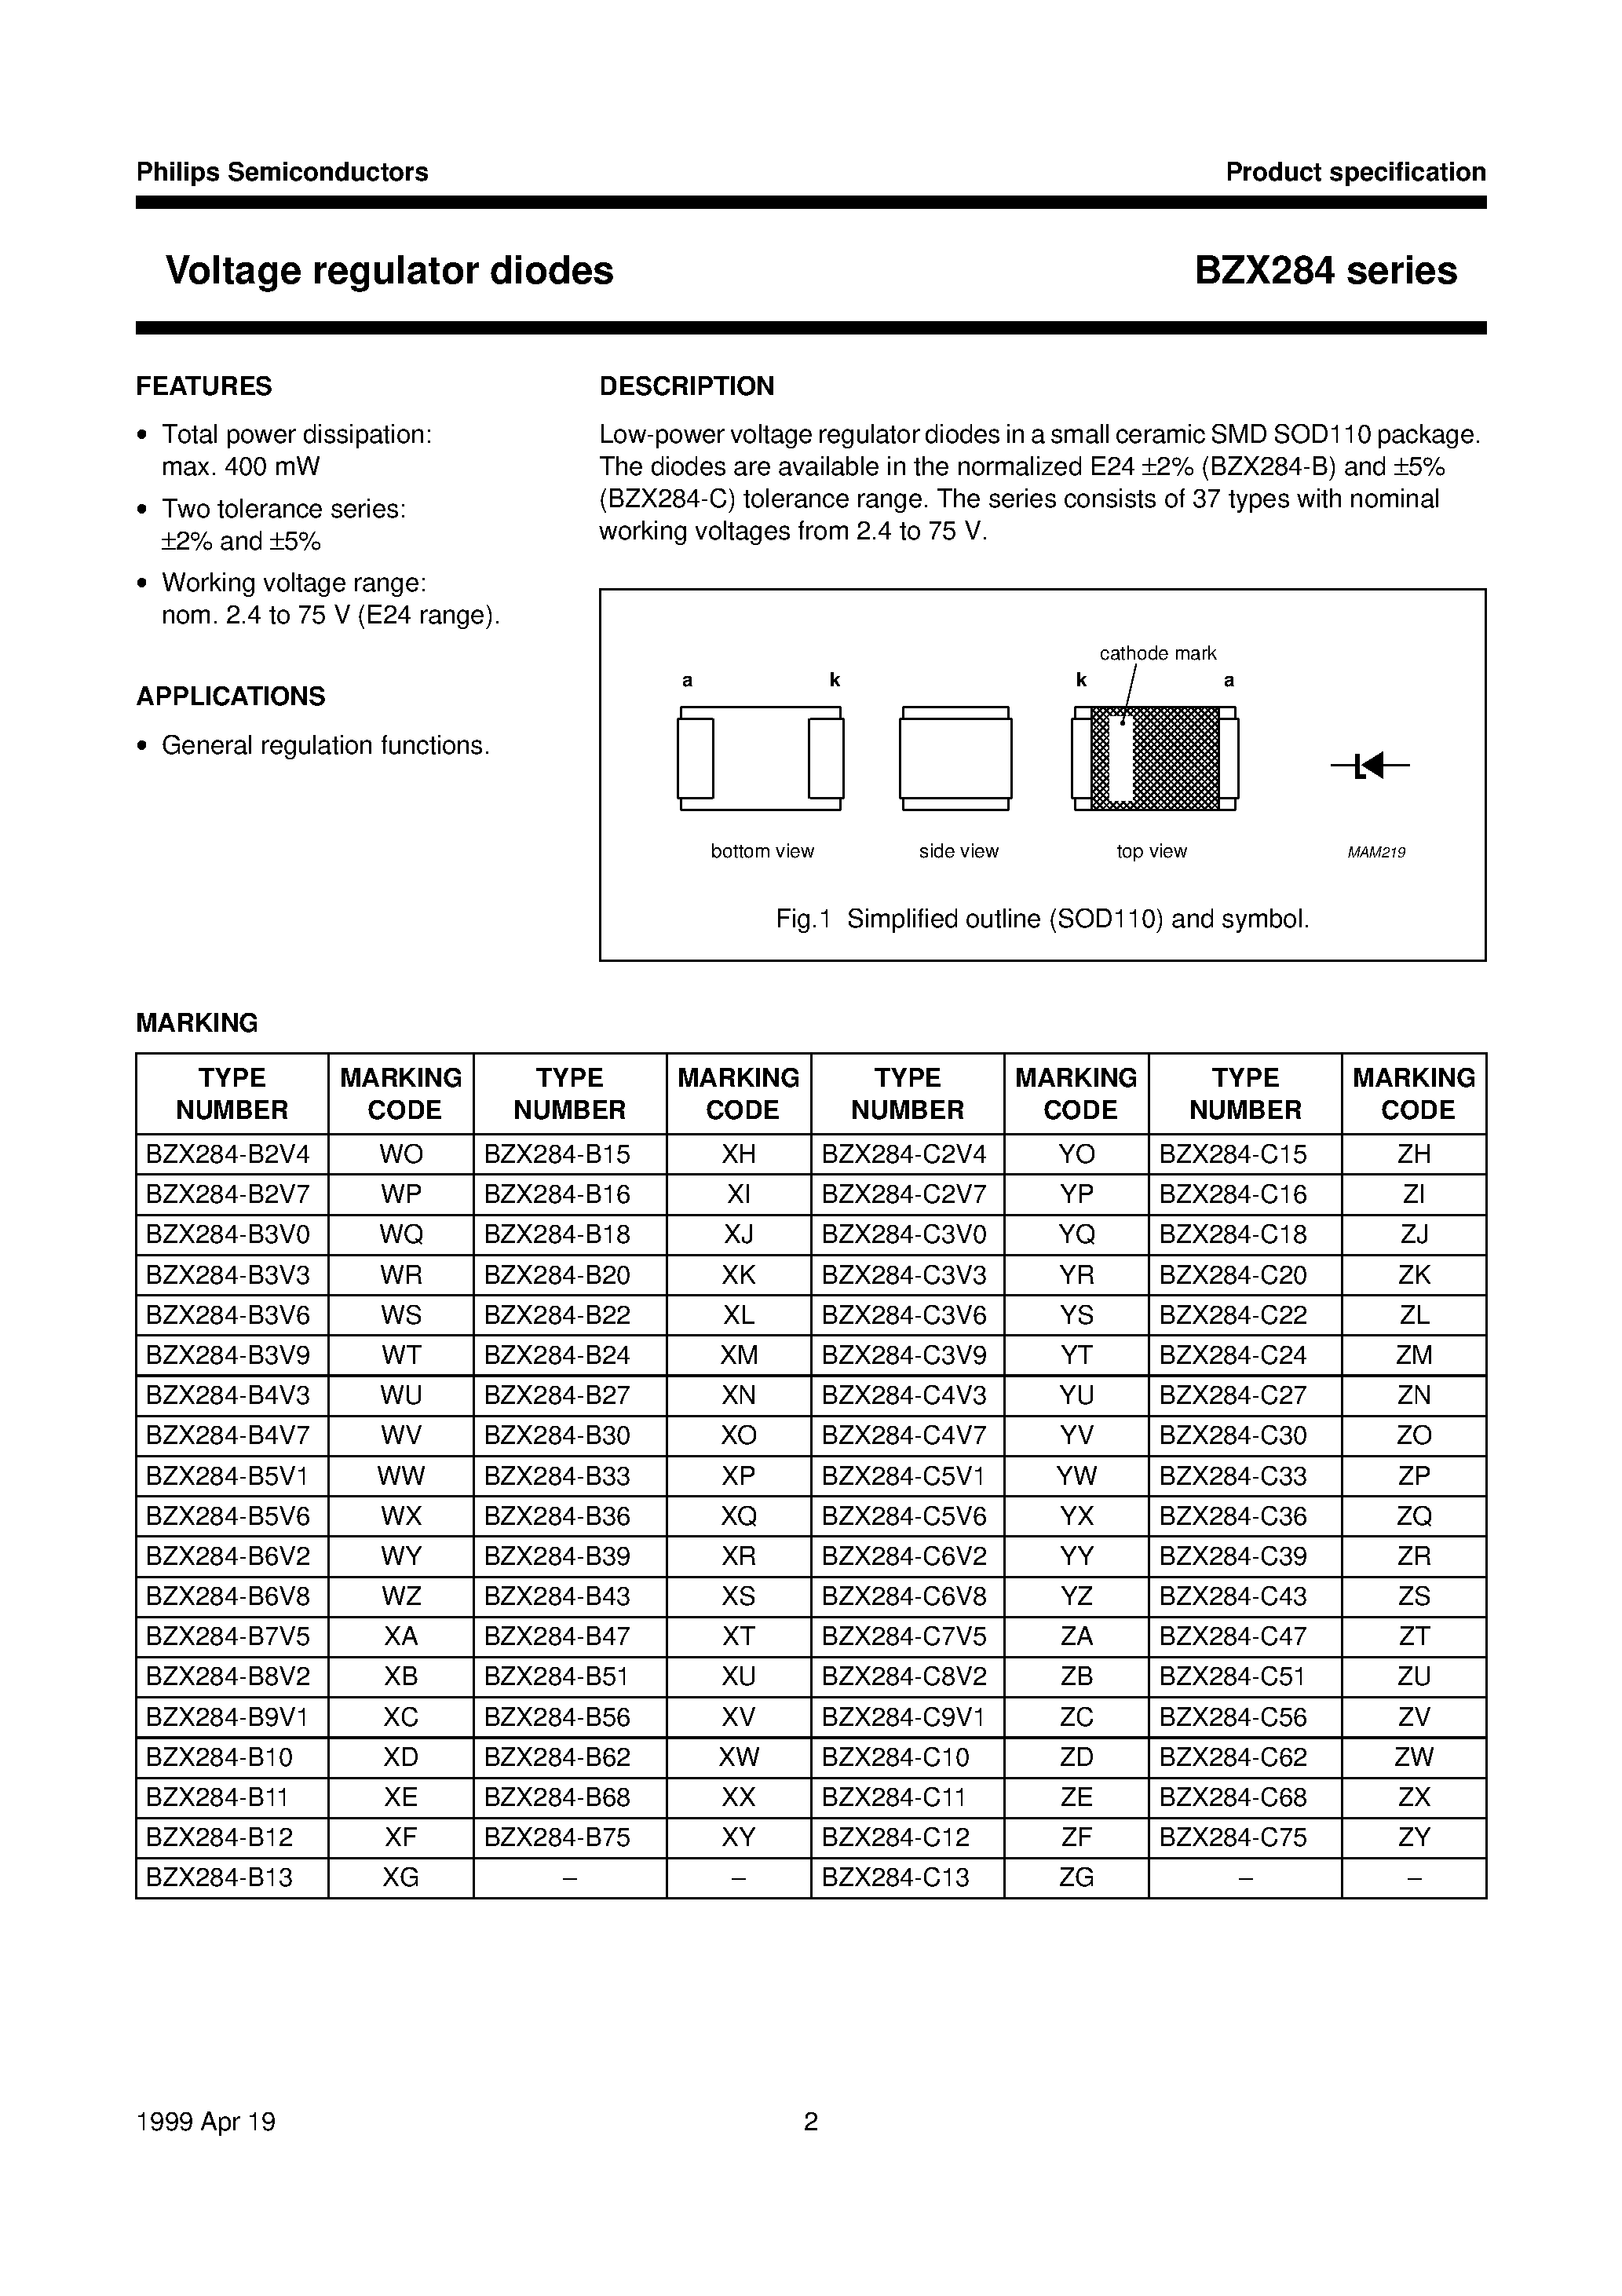 Datasheet BZX284-B6V2 - Voltage regulator diodes page 2